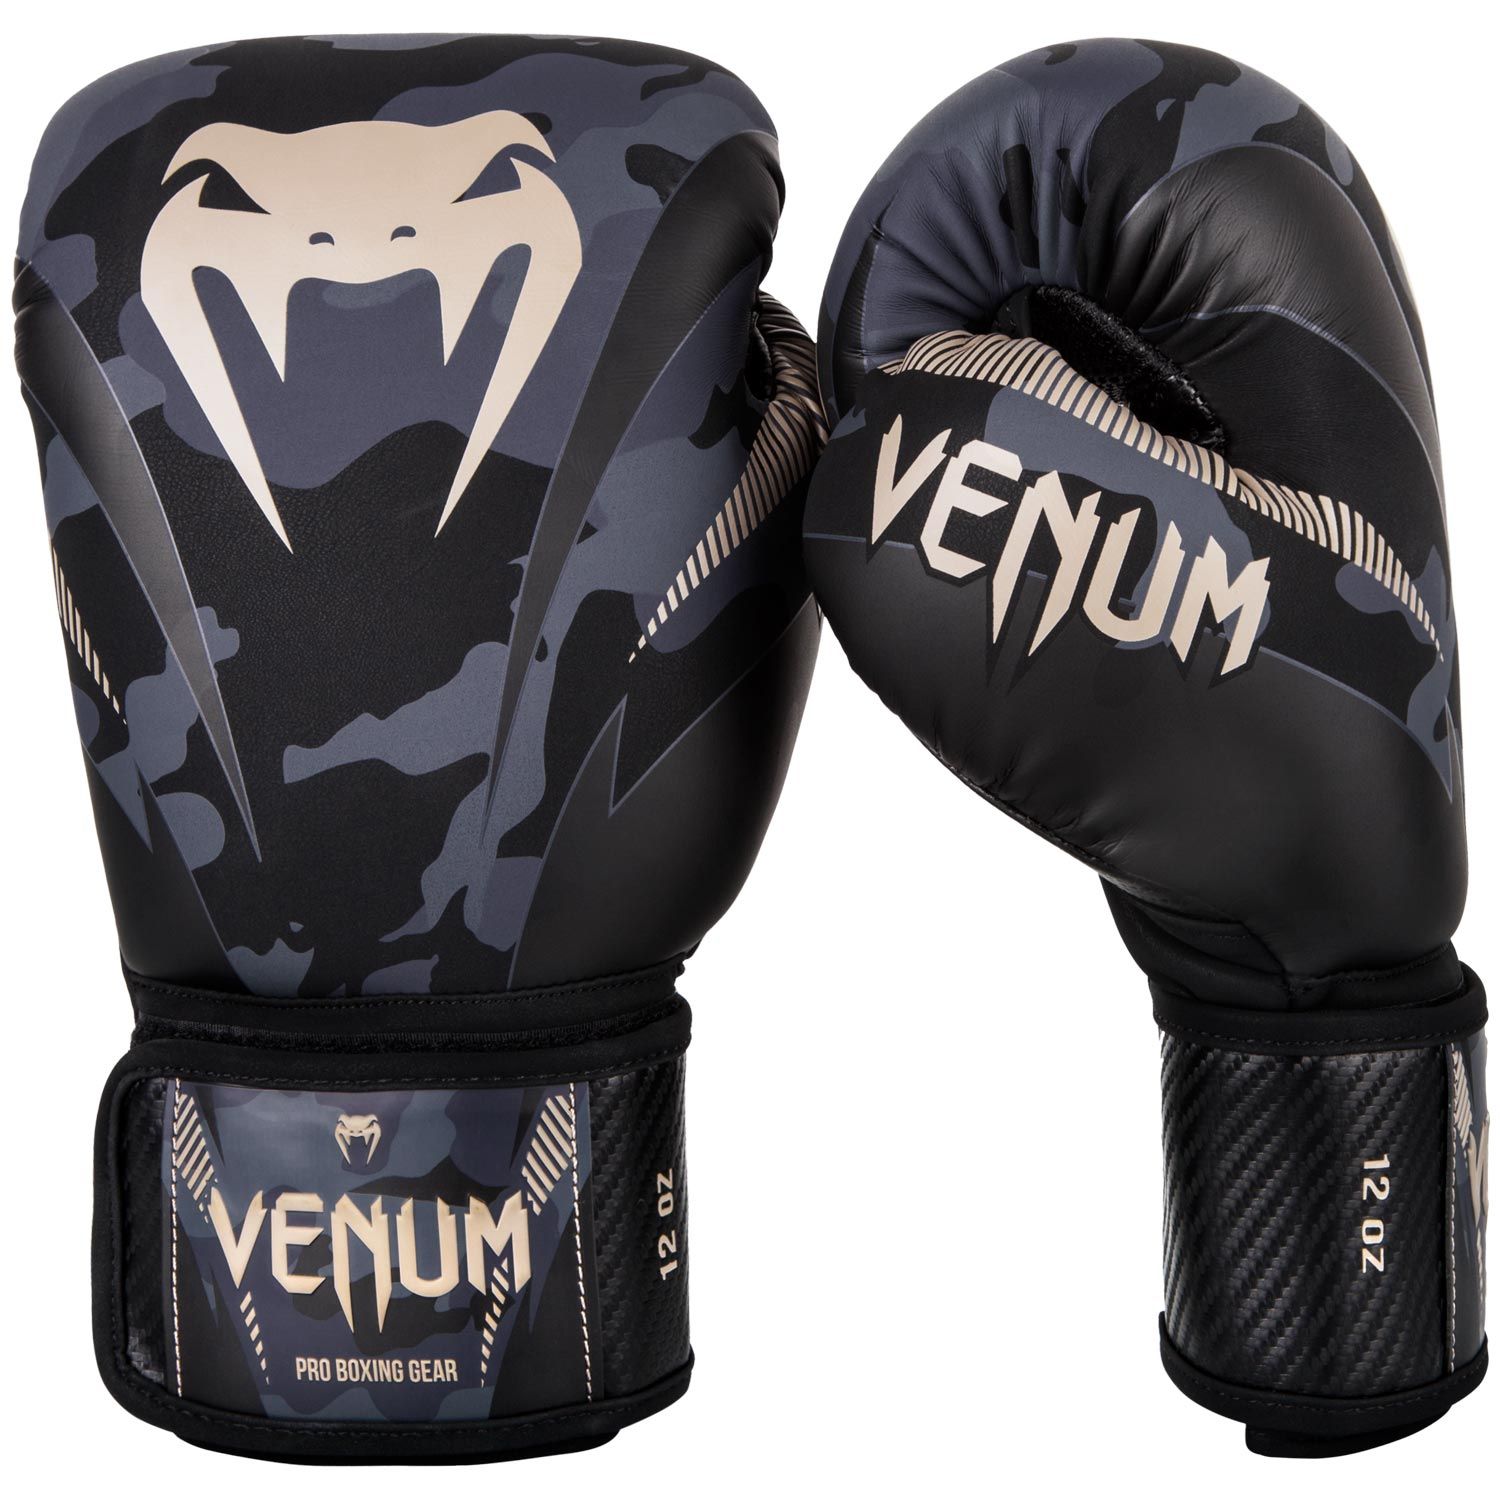 VENUM Impact Boxing Gloves Black Camo 